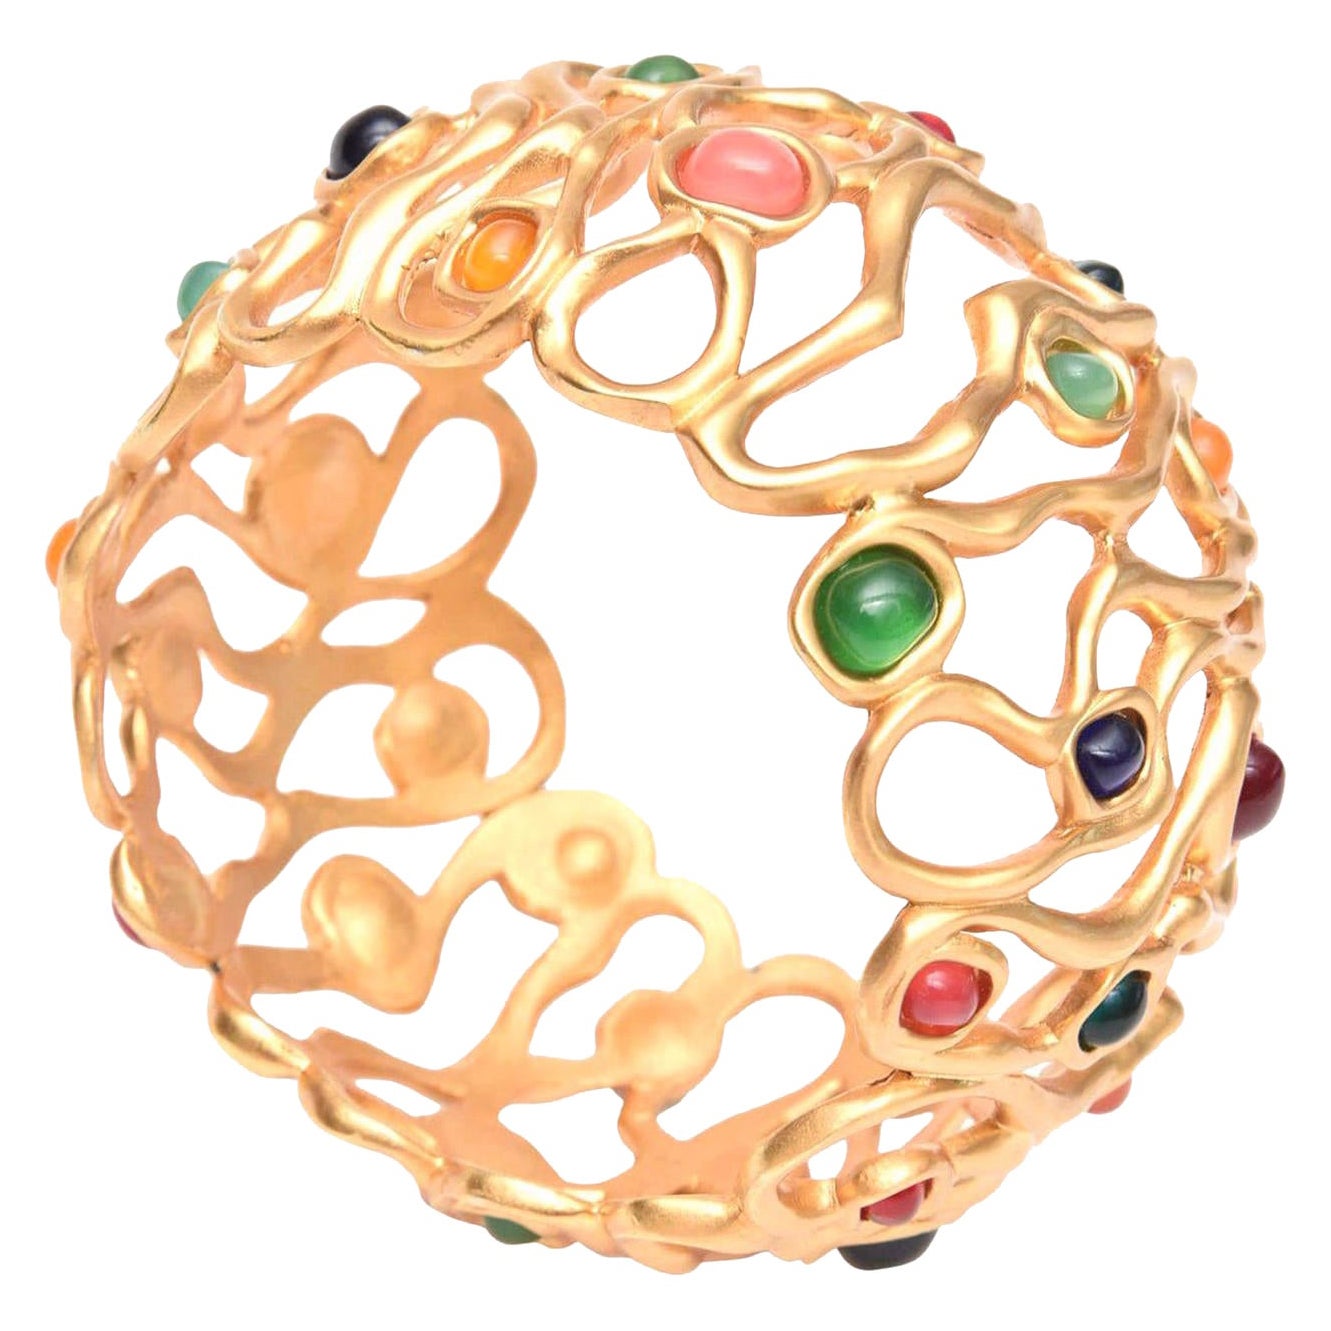  Jewel Tone Stone Cuff Bracelet With Gold Plate